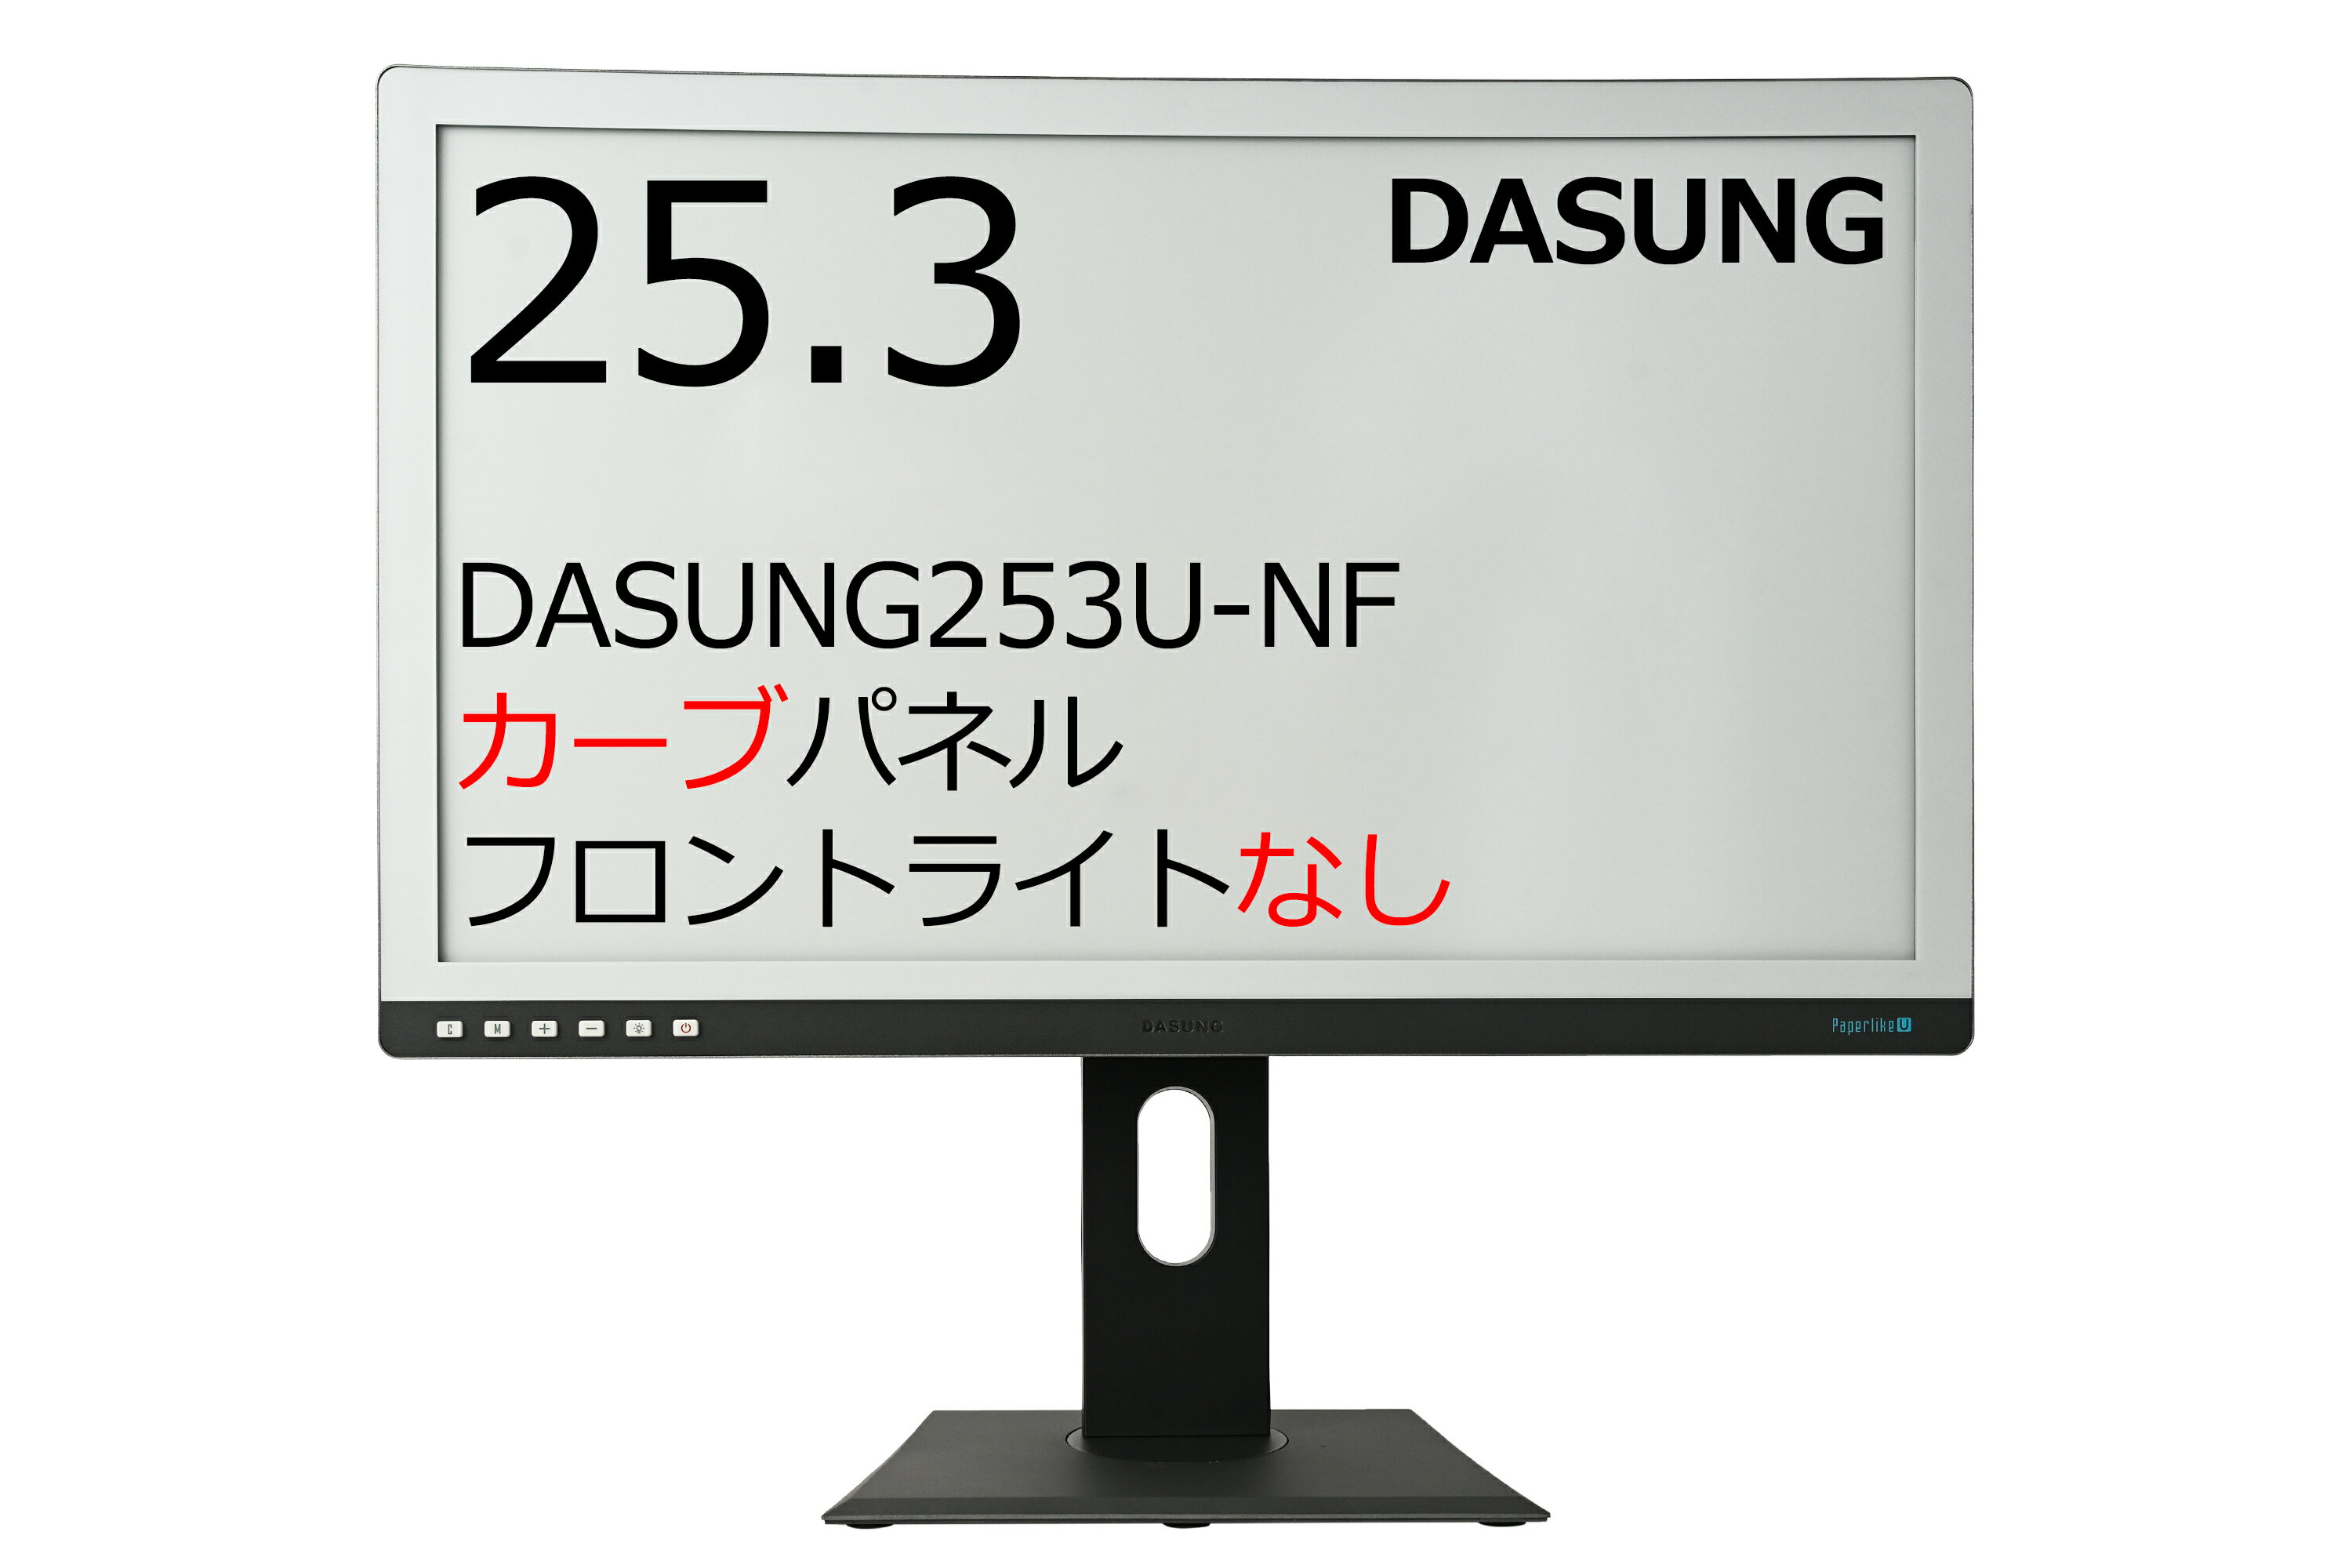 DASUNG253U-NF フロントライトなし 大画面 電子ペーパー EInk DASUNG 目に優しい 25.3インチ Windows11 M1チップ搭載Mac対応